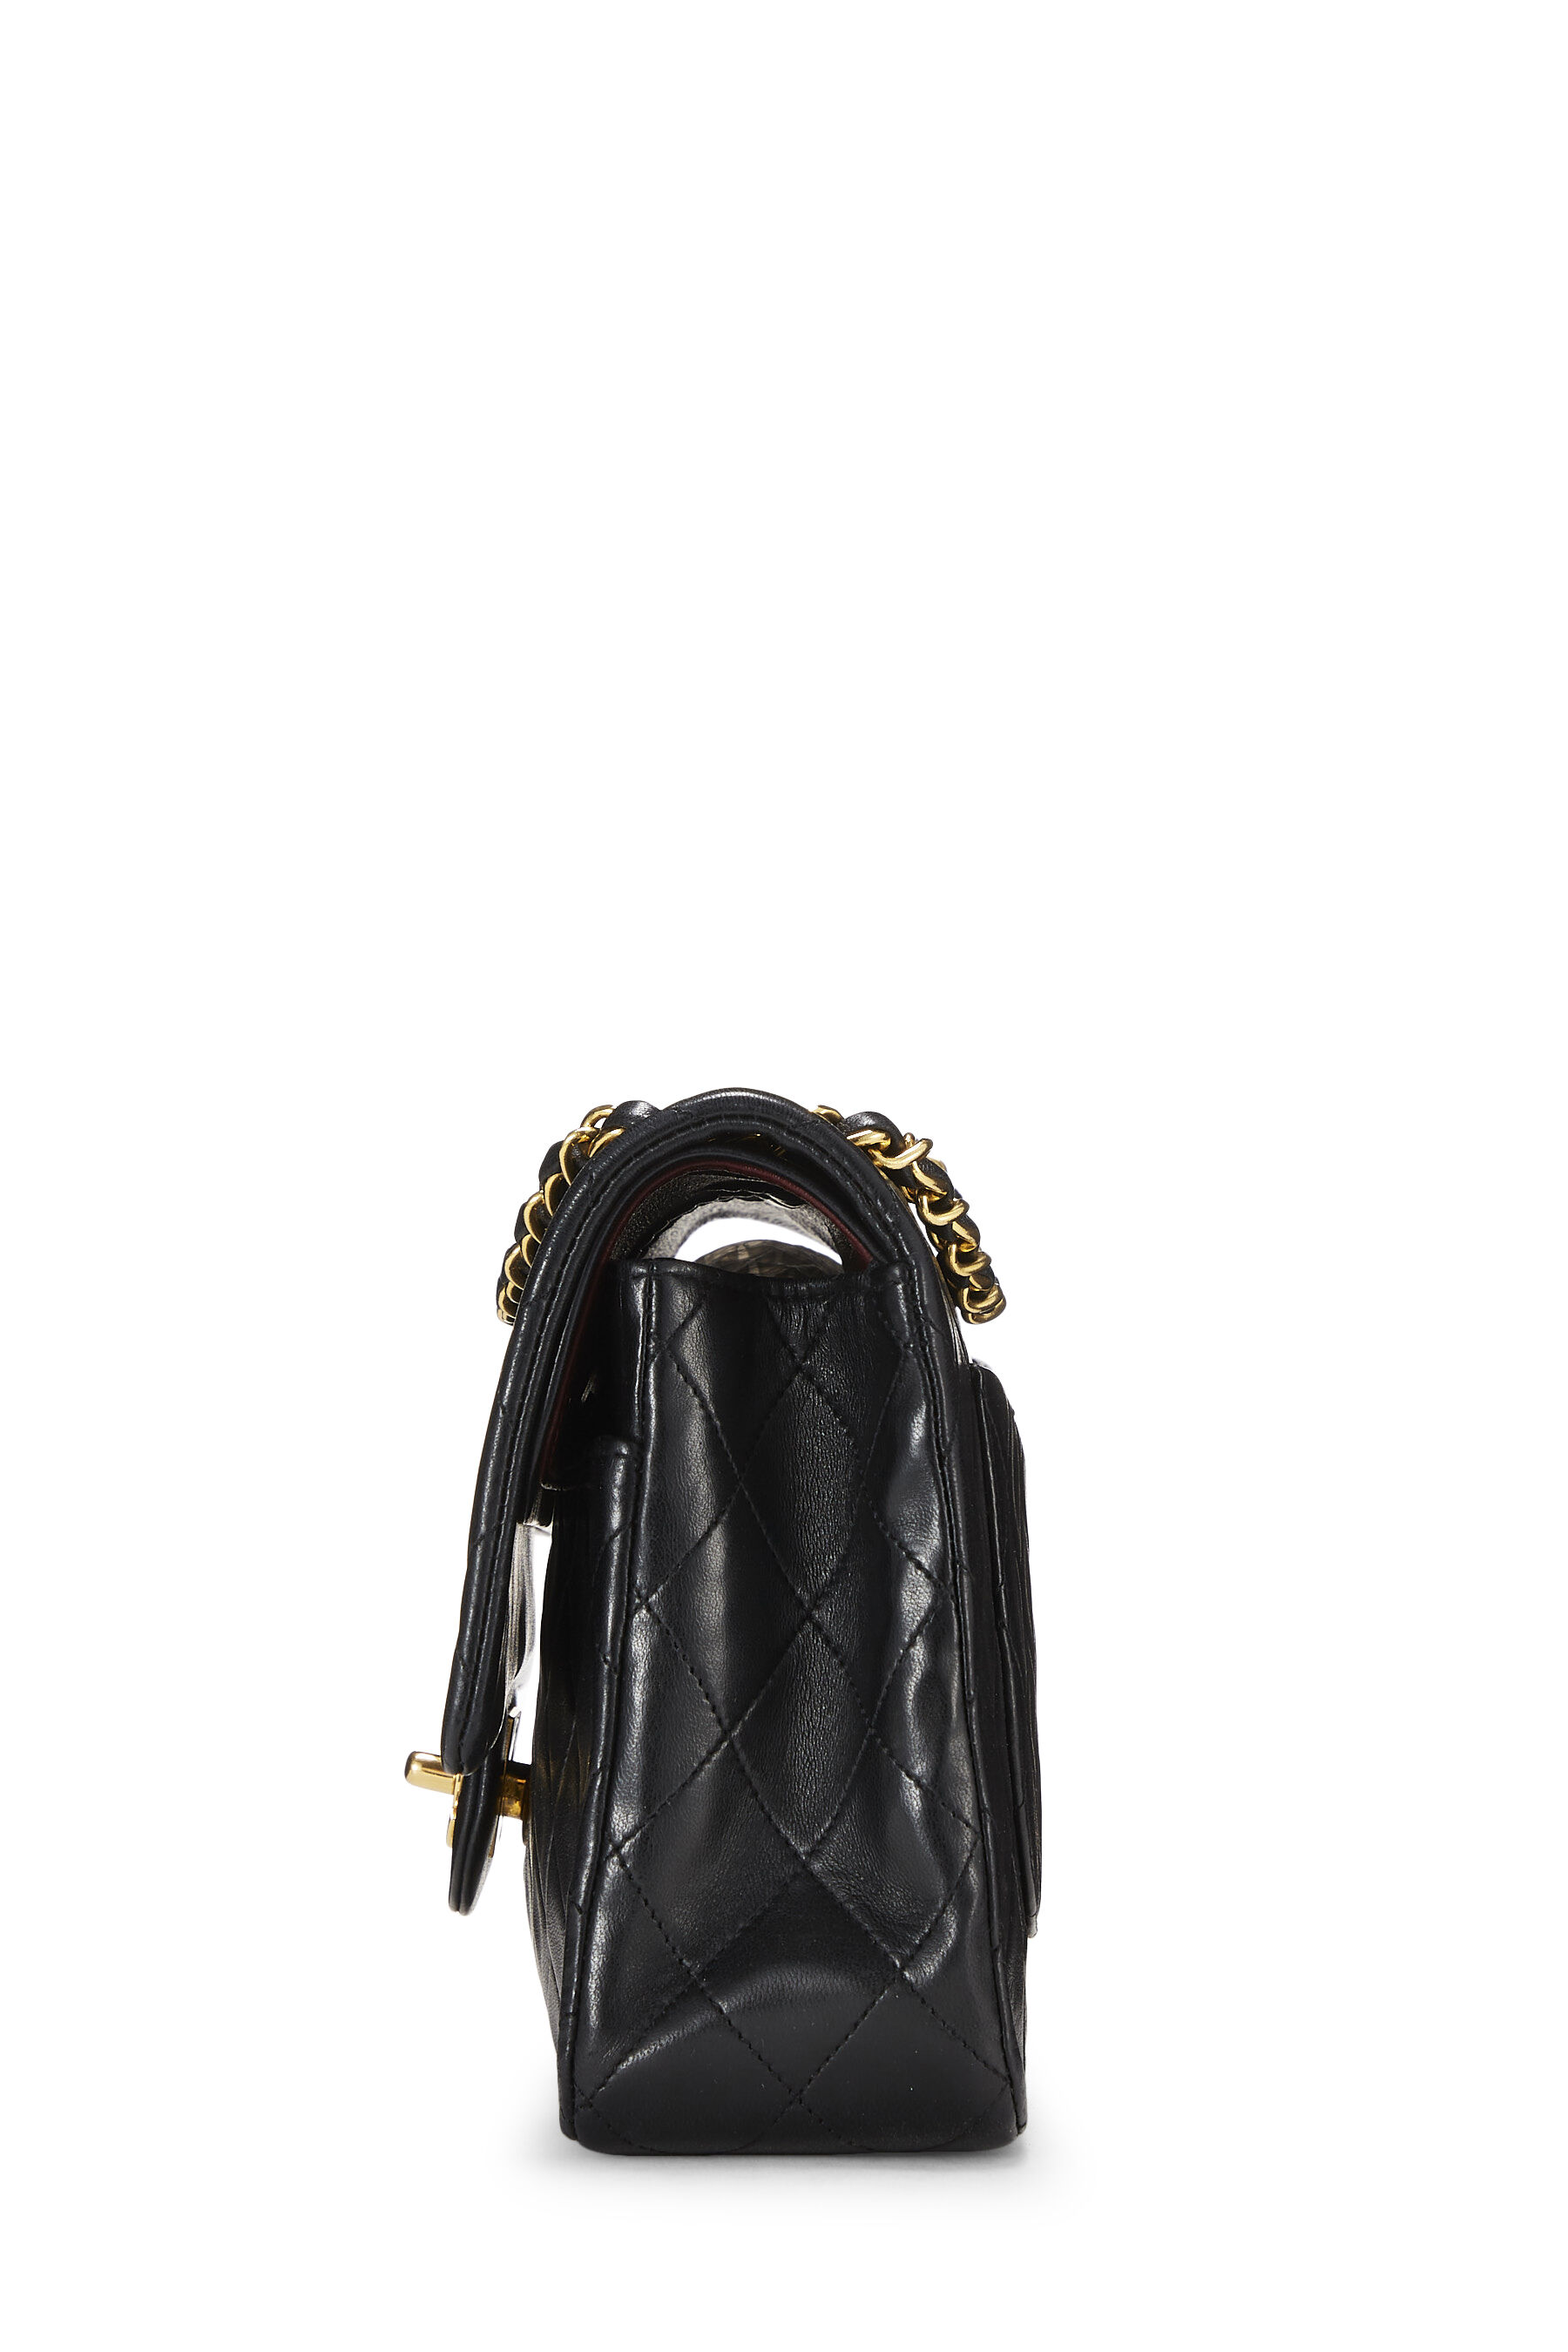 chanel bag black on black handle